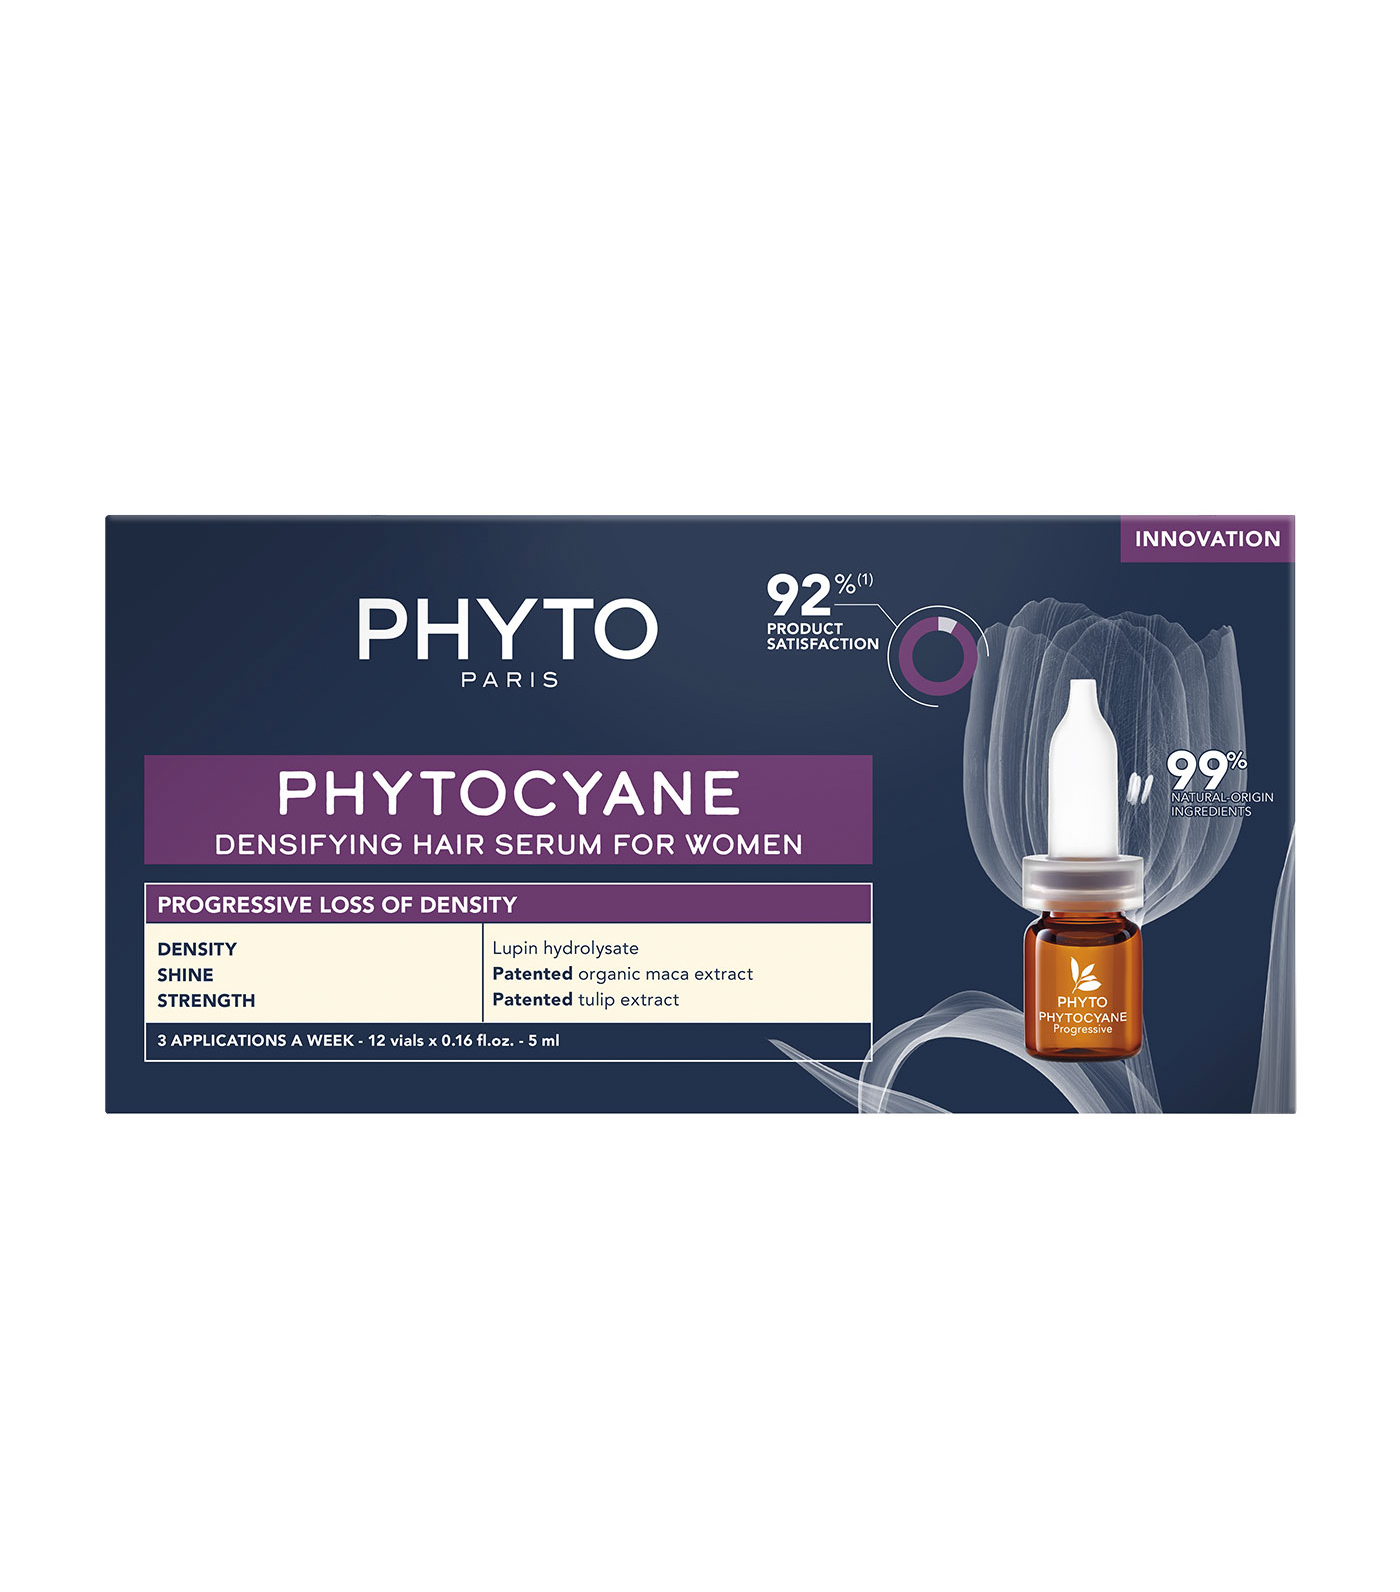 Phytocyane Densifying Hair Serum for Women